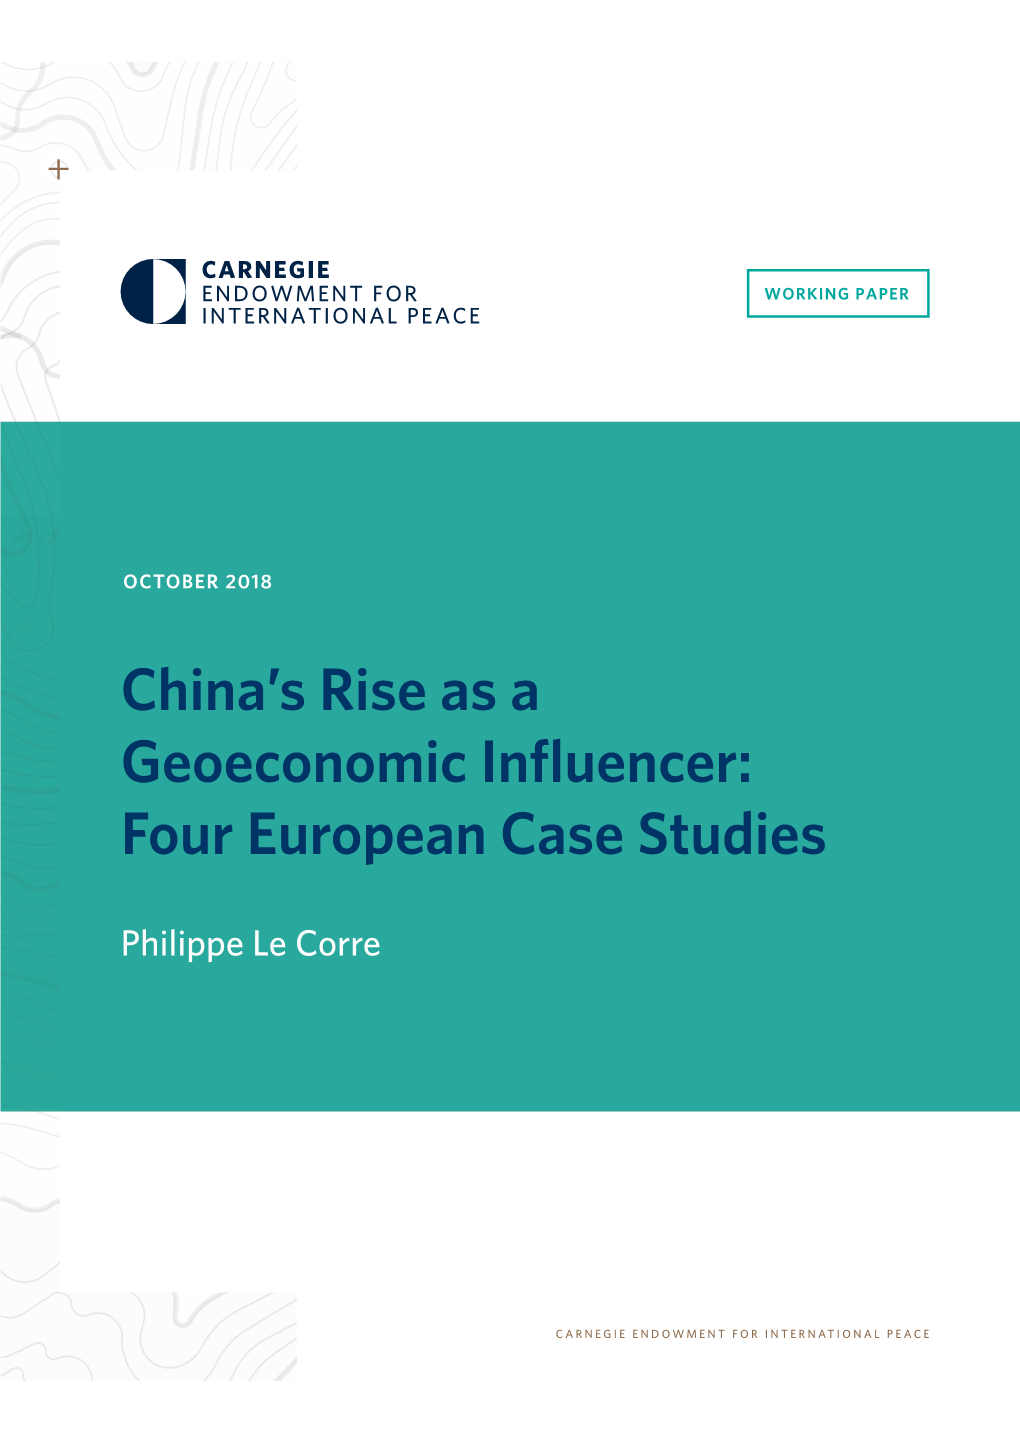 China's Rise As a Geoeconomic Influencer: Four European Case